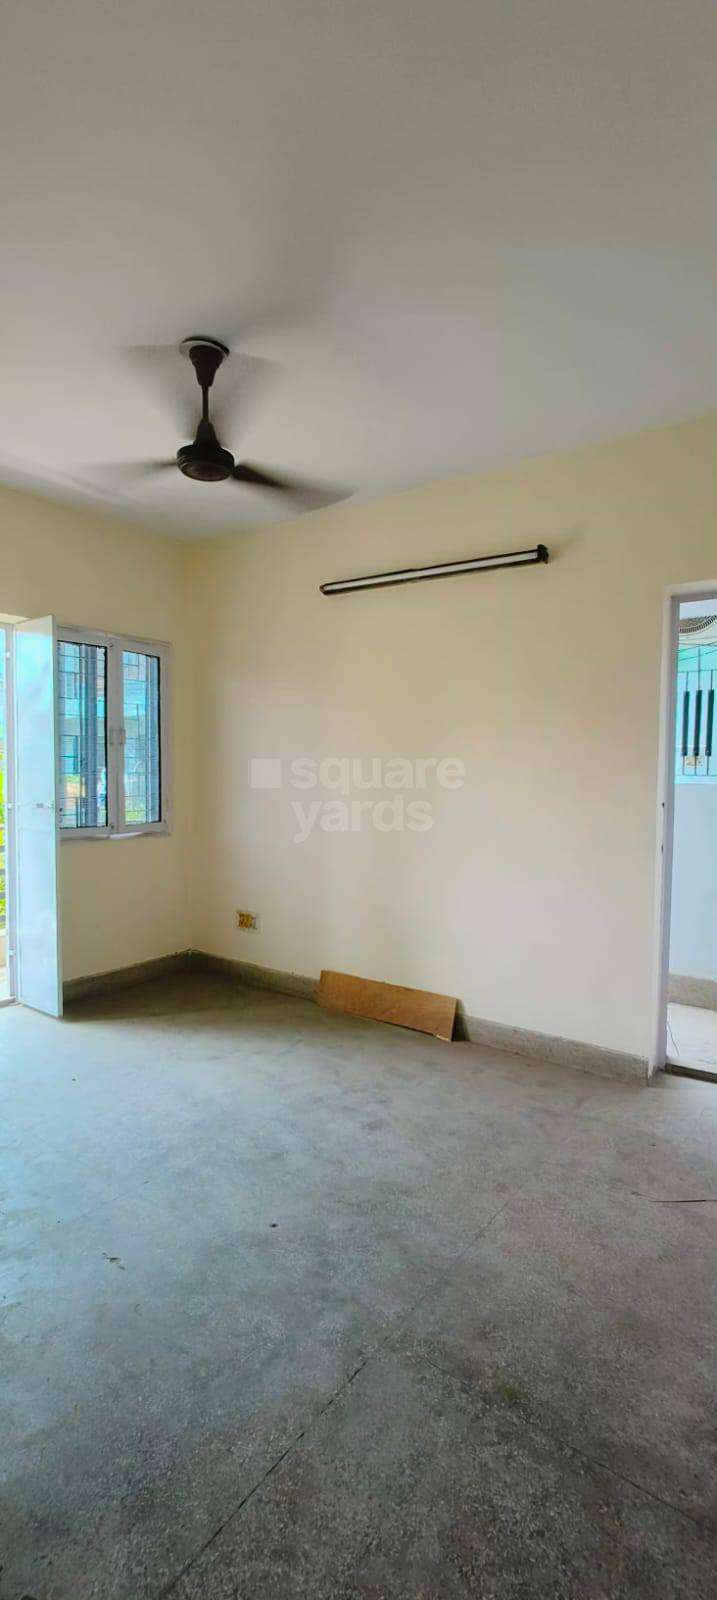 2.5 Bedroom 750 Sq.Ft. Builder Floor in Vikas Puri Delhi